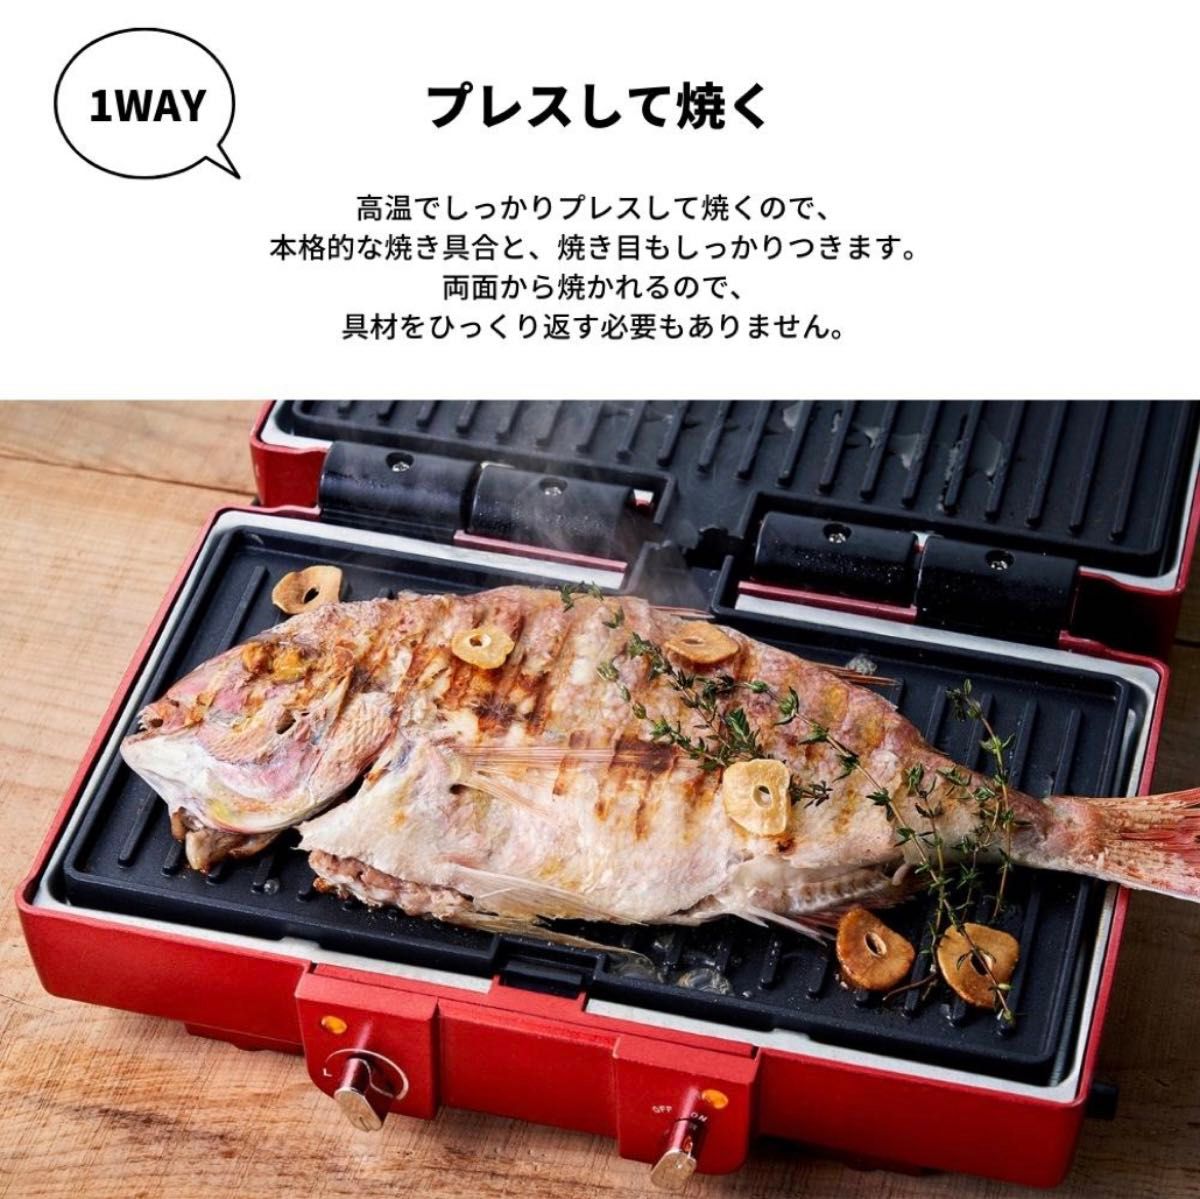 D&S プレスグリル 日本洋食器 レッド リバーシブルプレート 両面焼き ホットプレート 焼肉 バーベキュー 焼き鳥 ステーキ